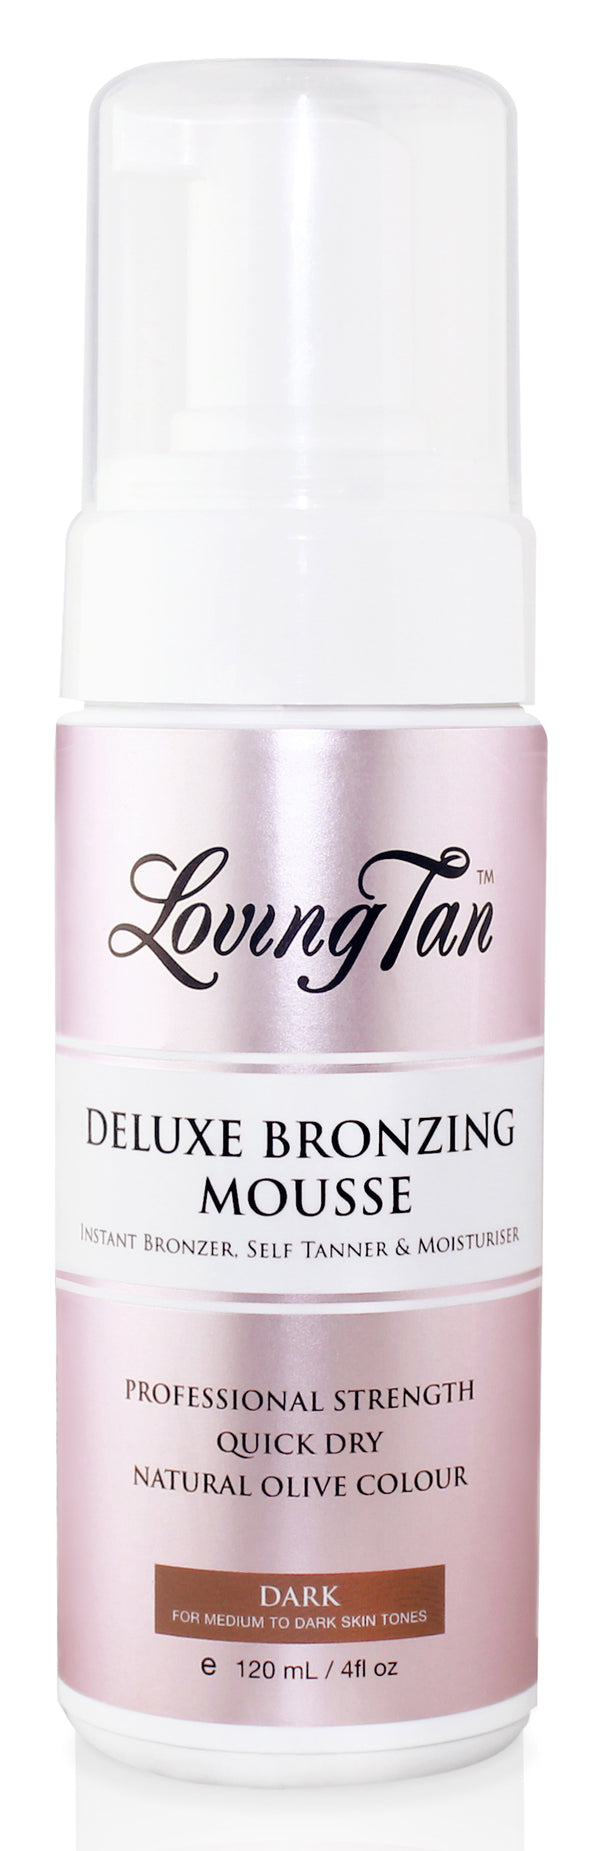 Loving Tan Deluxe Bronzing Mousse Dark for Self Tanning